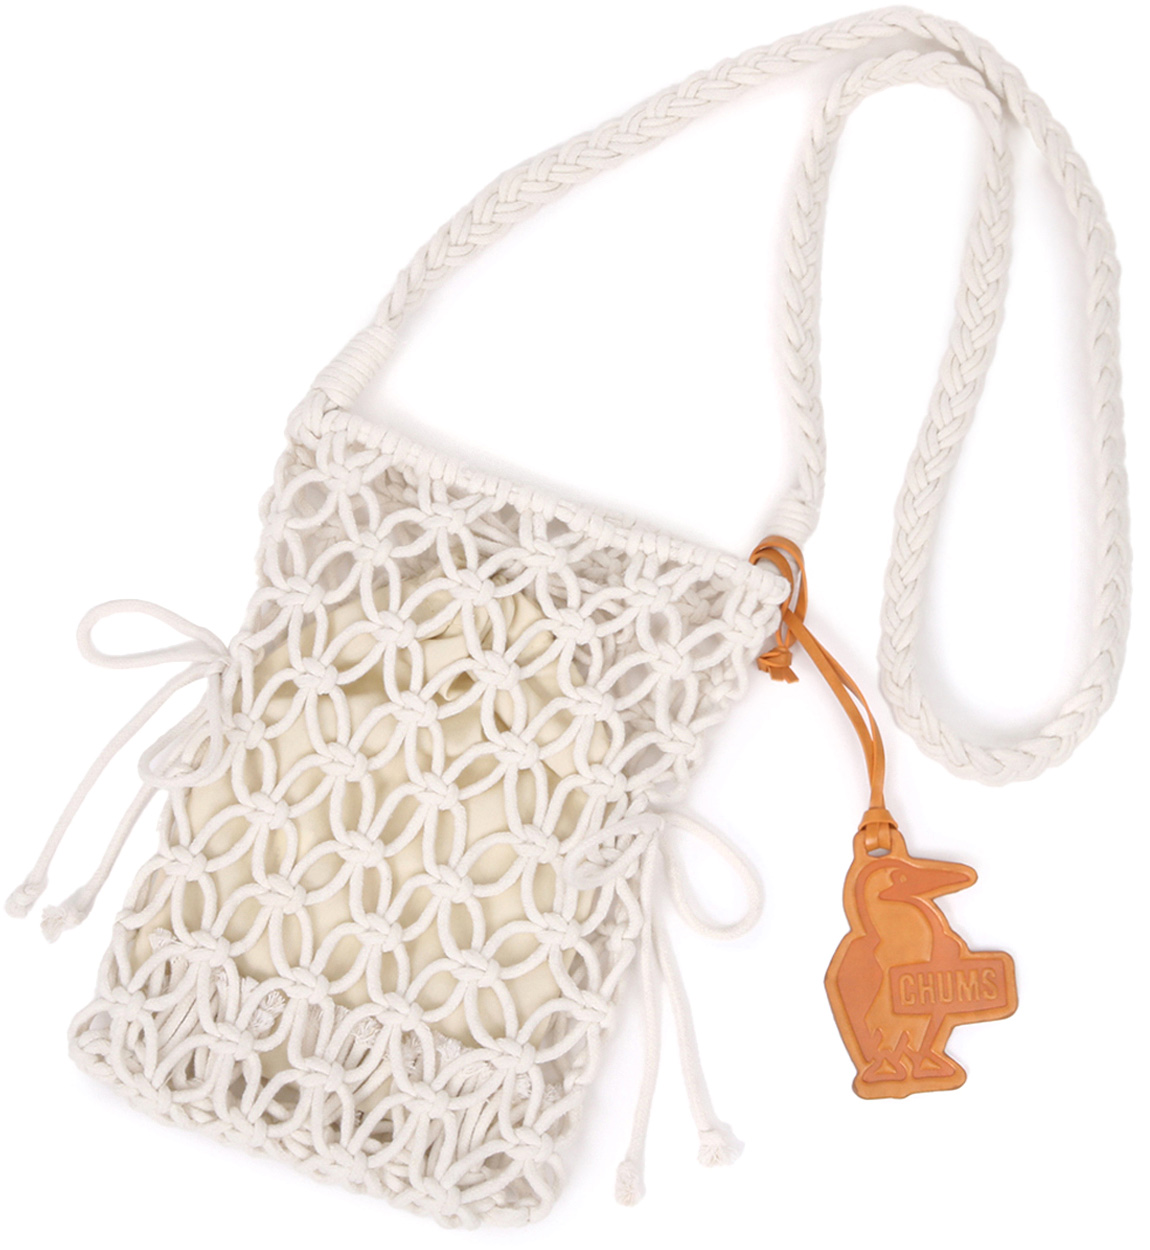 CHUMS Knitting Rope Shoulder Bag ニッティング ロープ ショルダーバ...